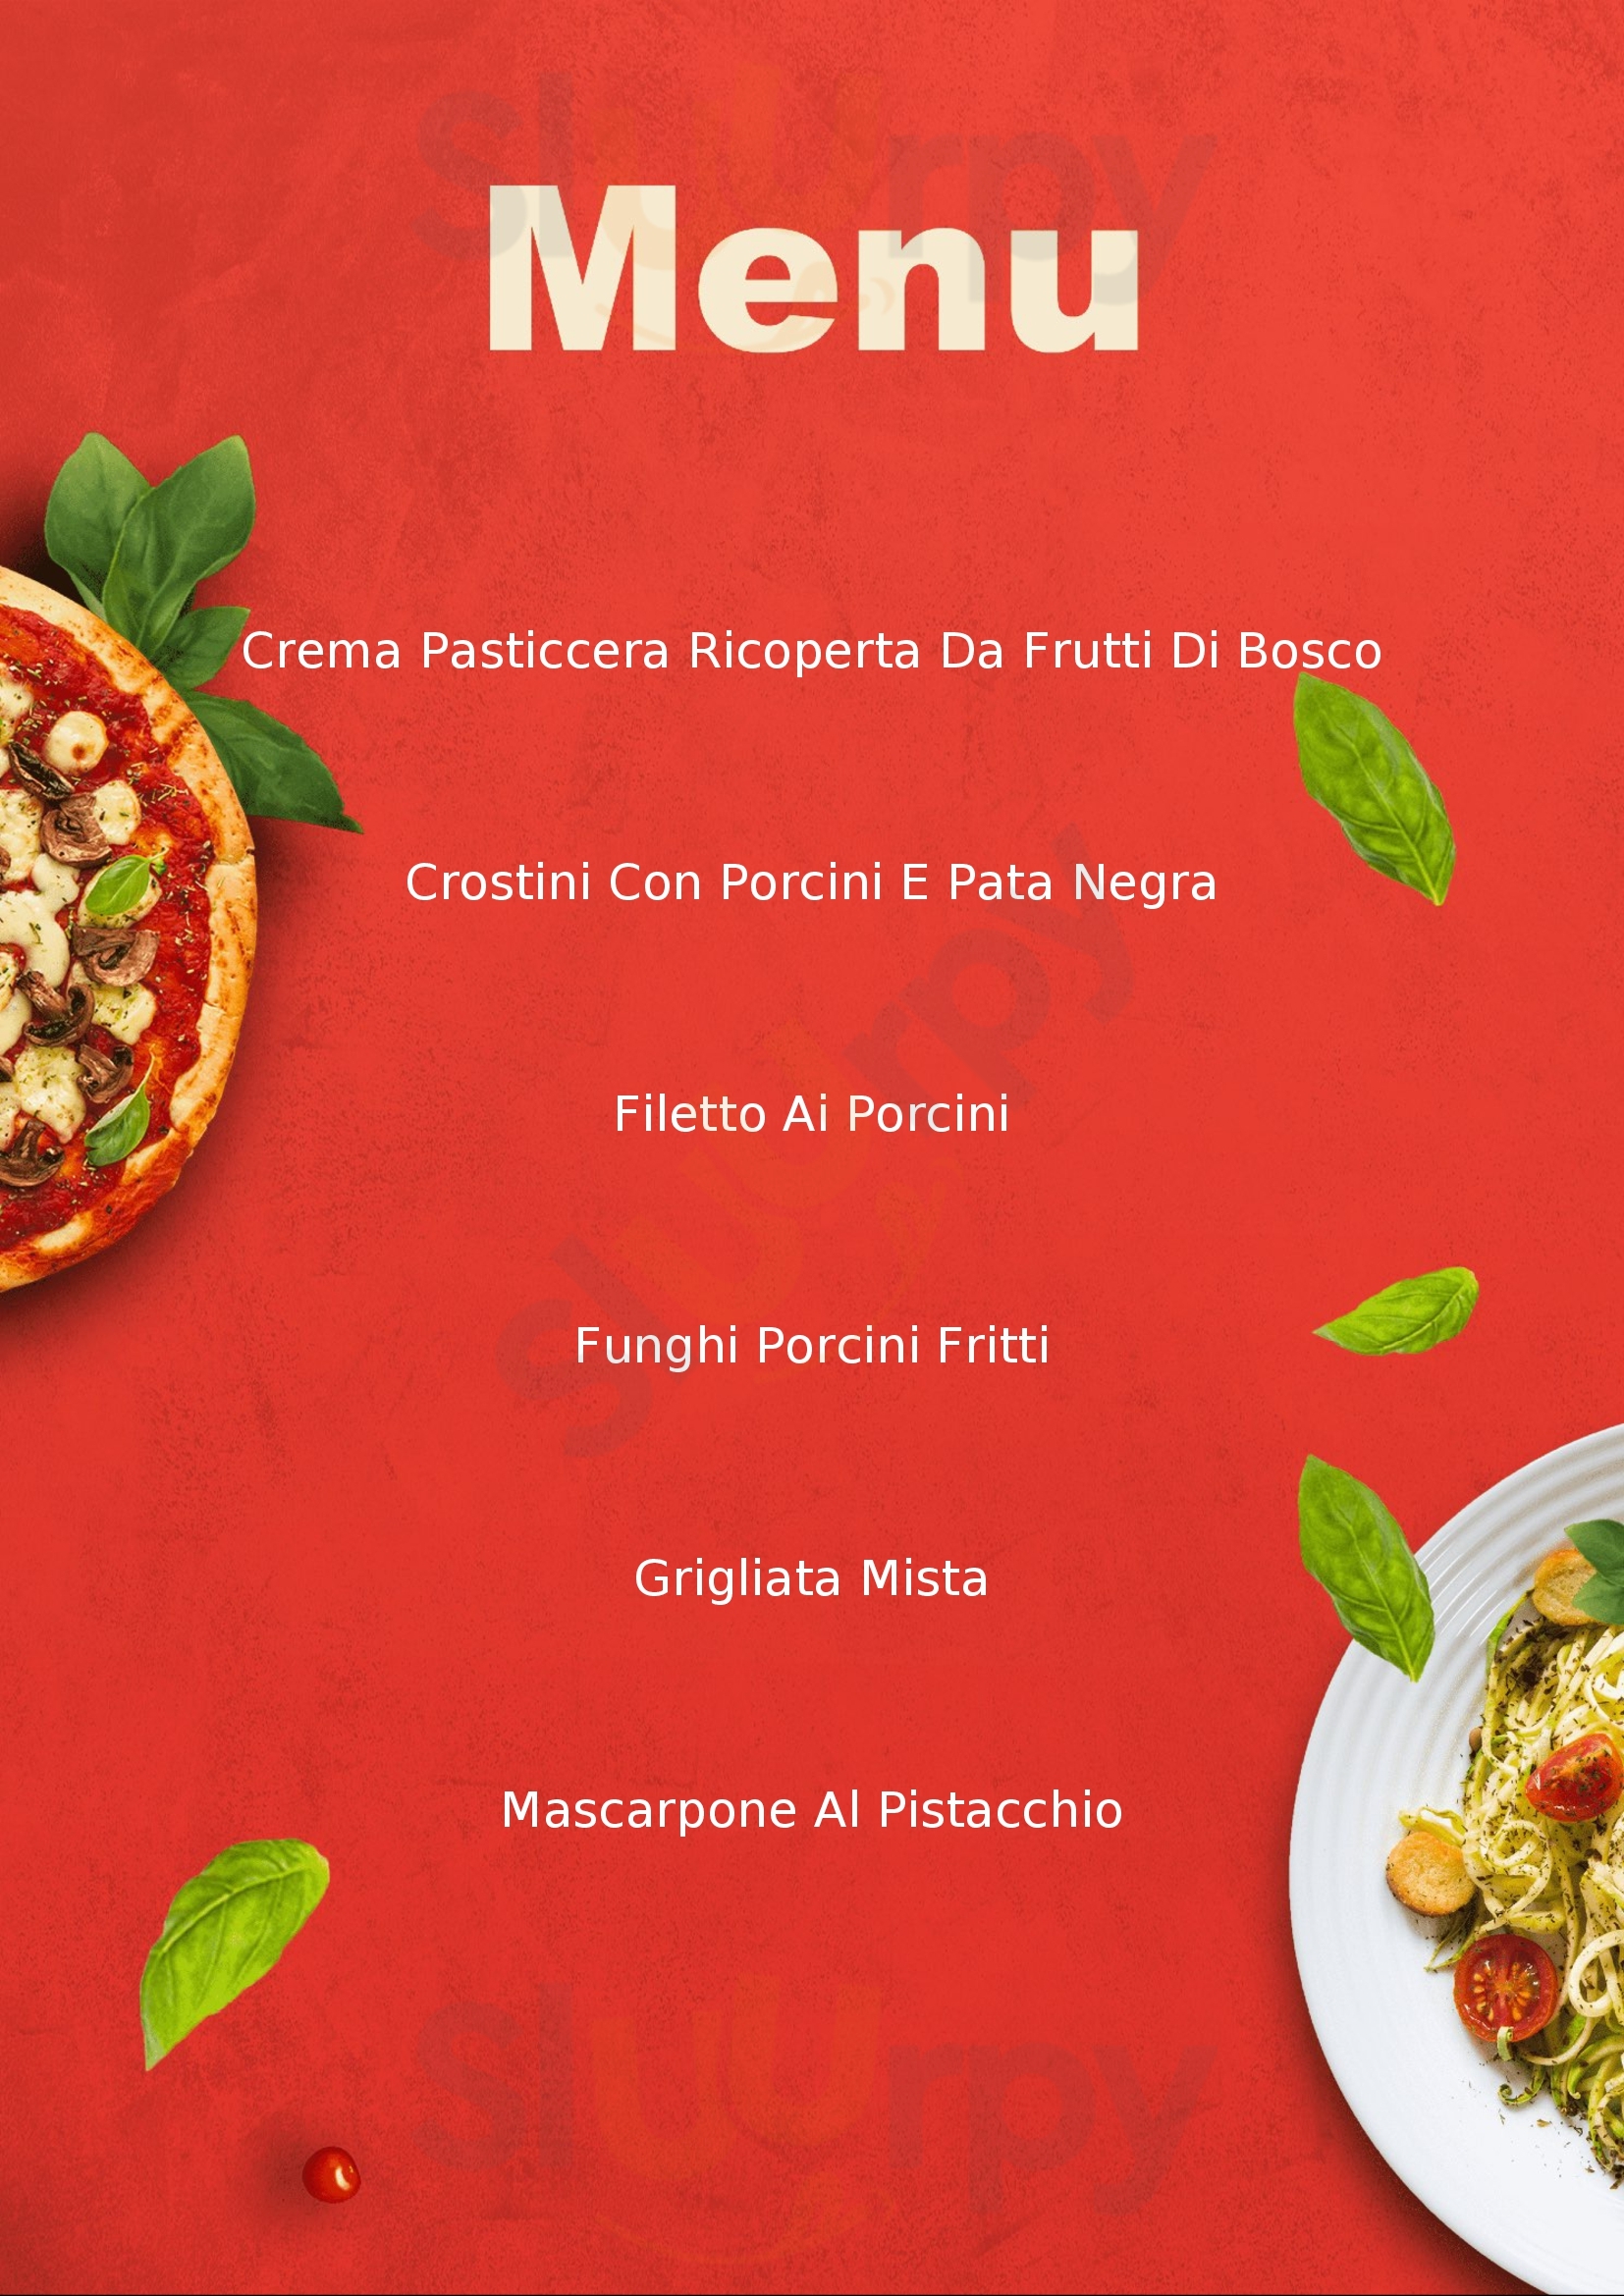 Aquila Nera ristorante pizzeria Monte San Pietro menù 1 pagina